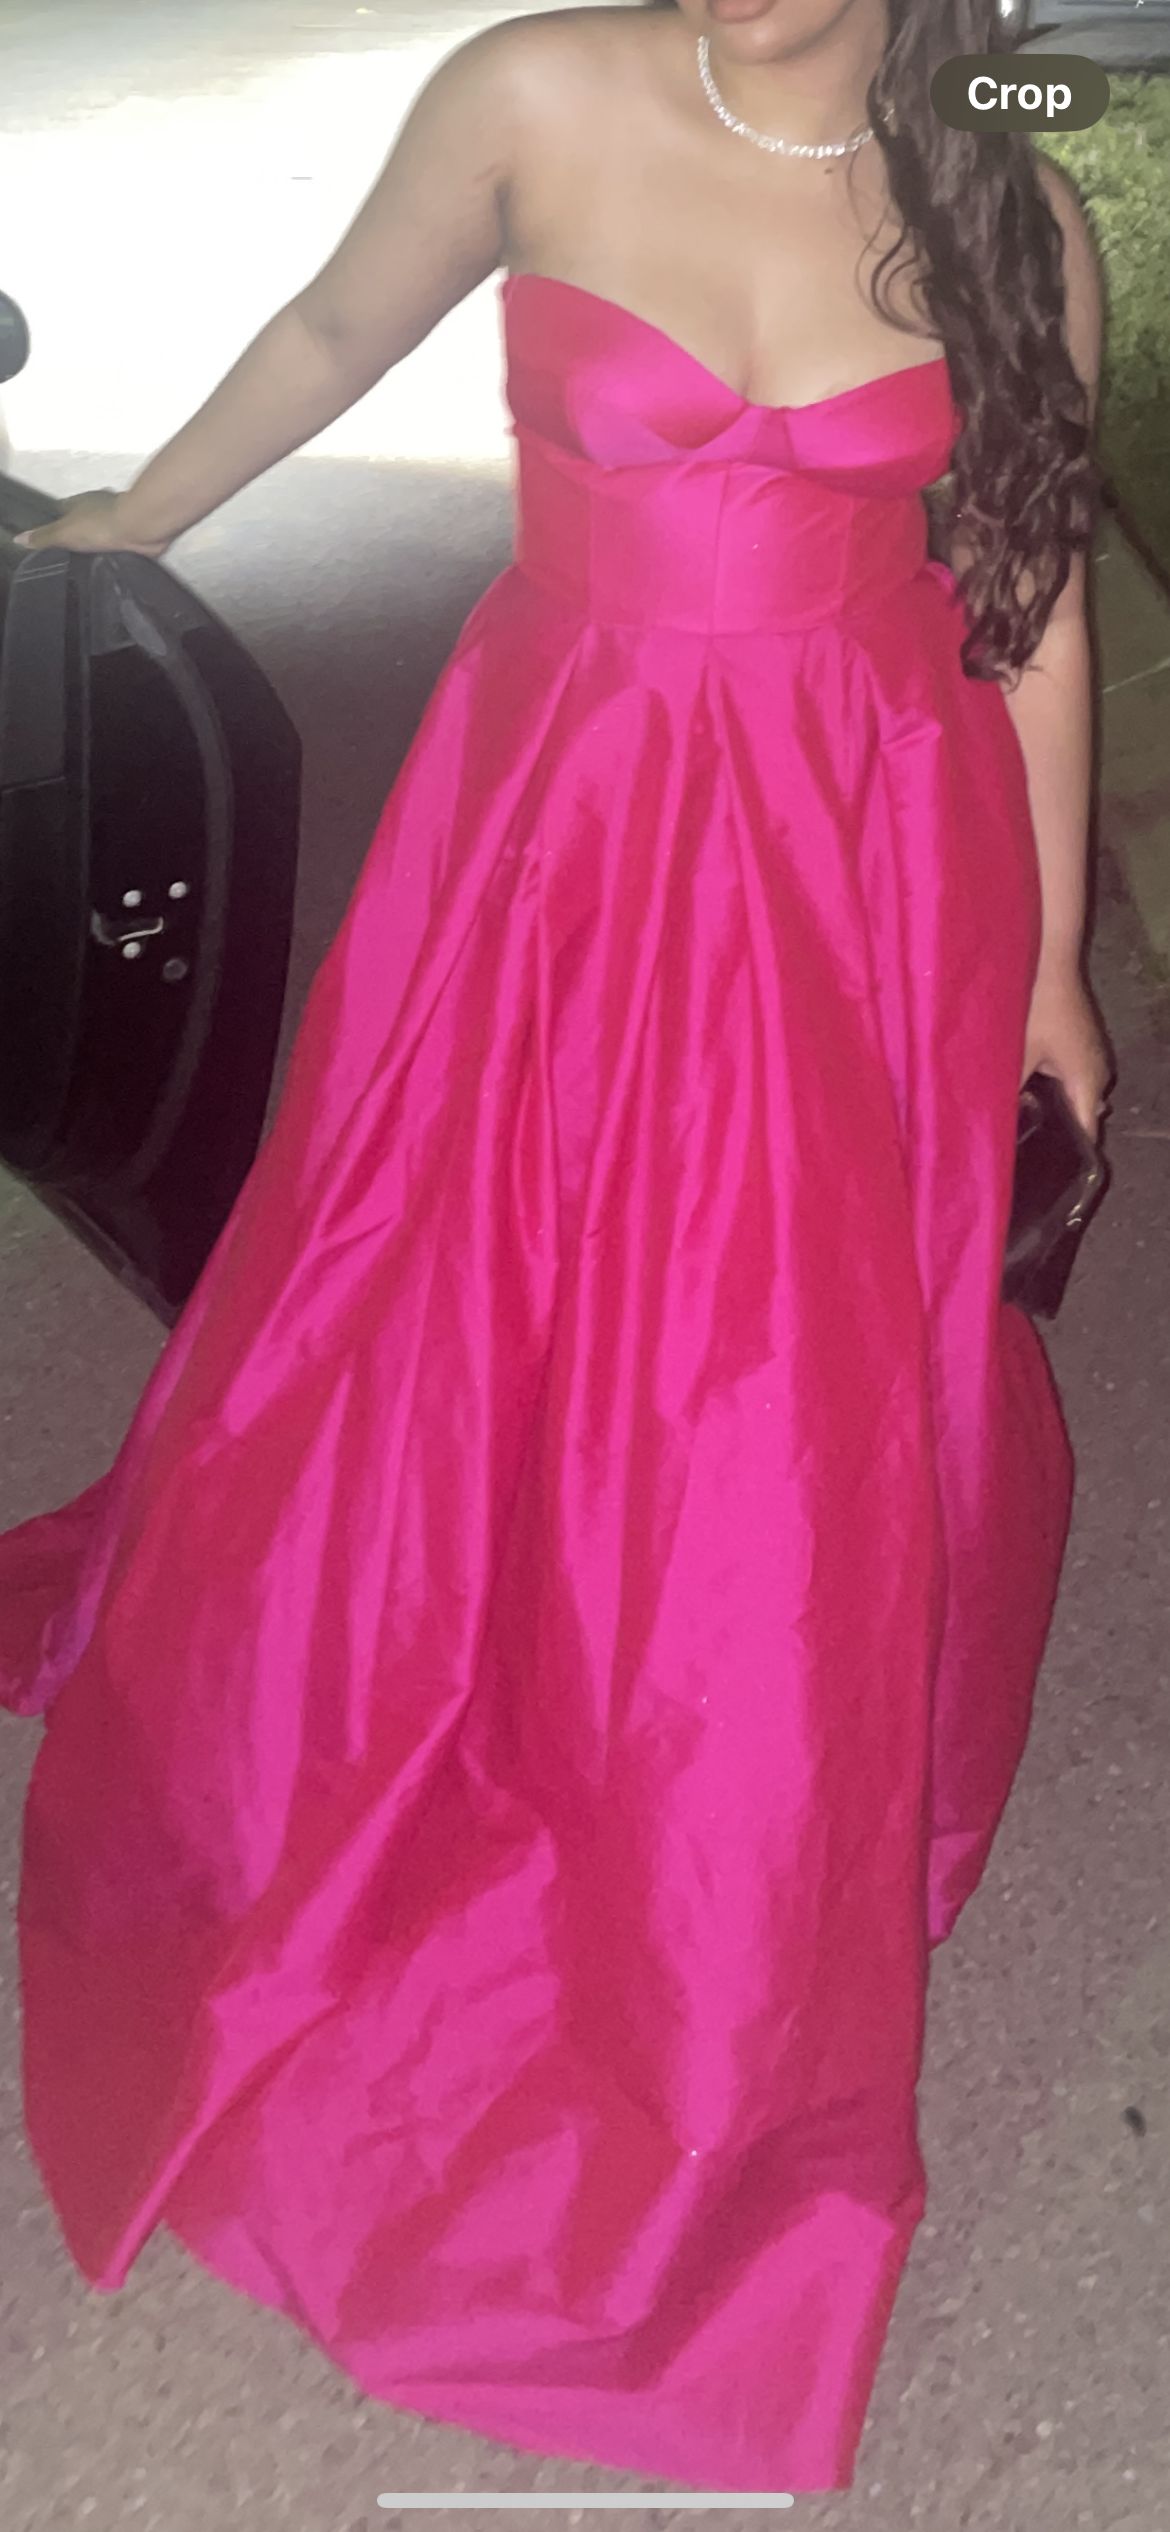 Style 52022 Tarik Ediz Size 10 Hot Pink A-line Dress on Queenly